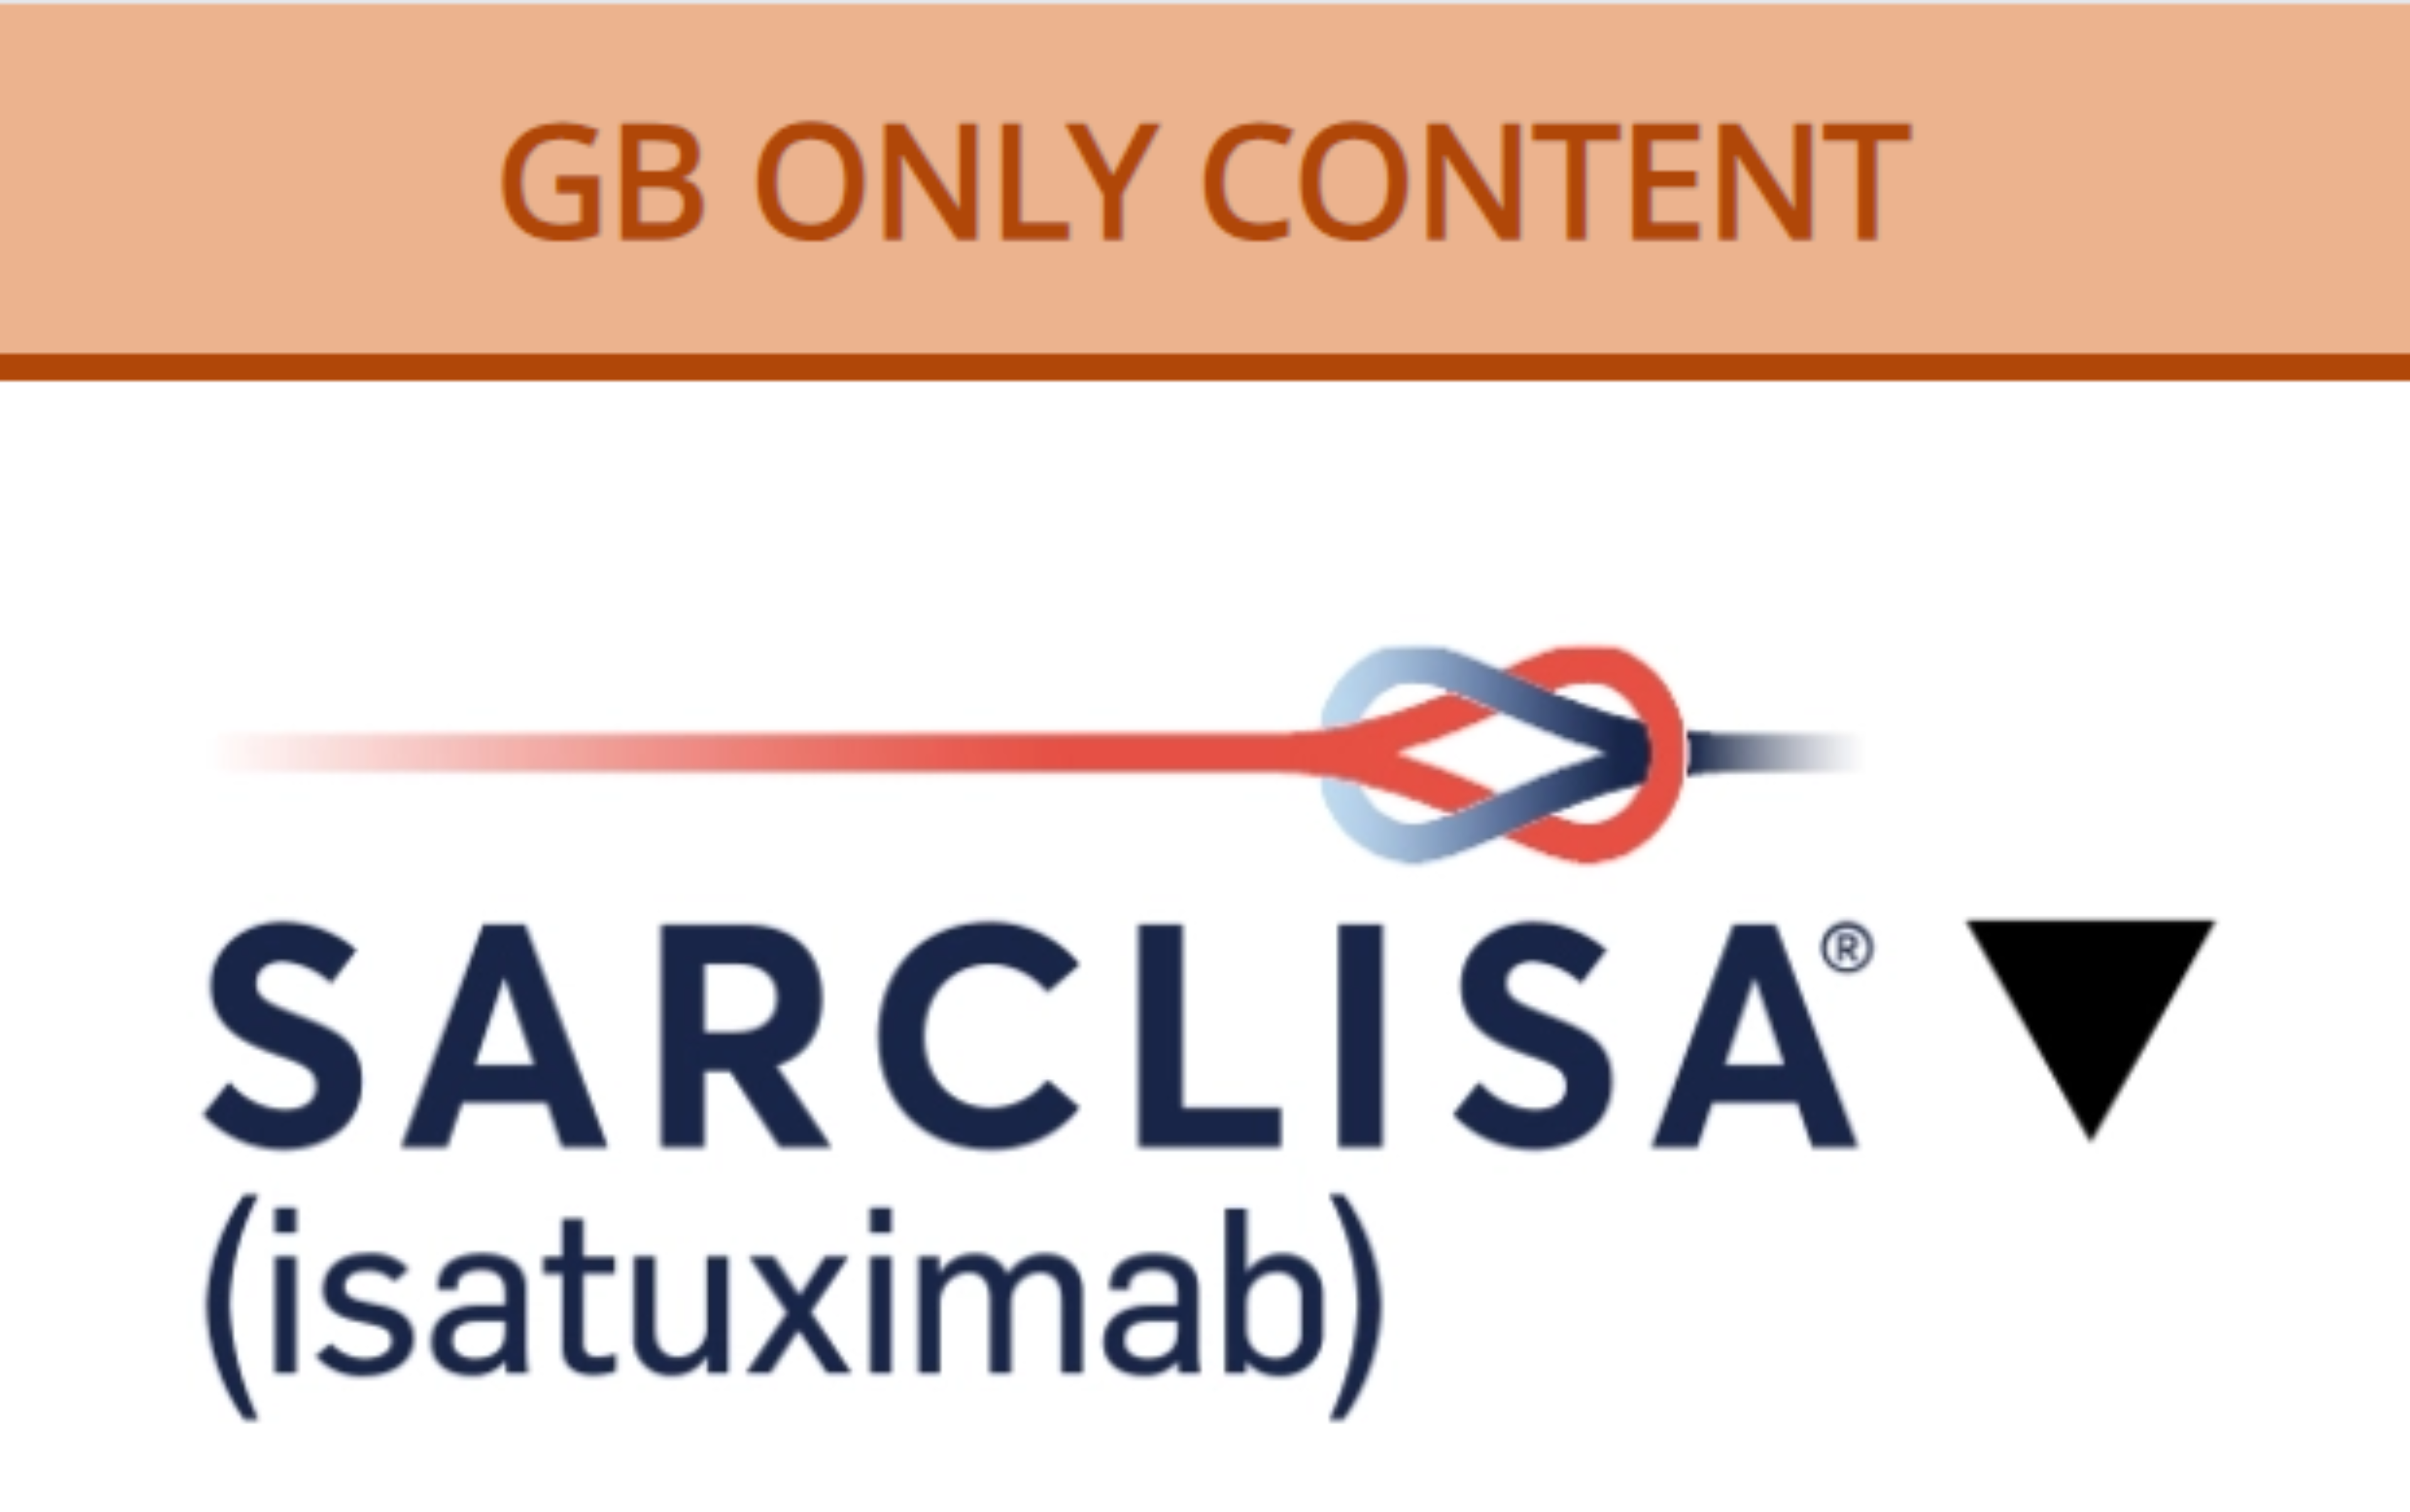 Sarclisa logo GB only